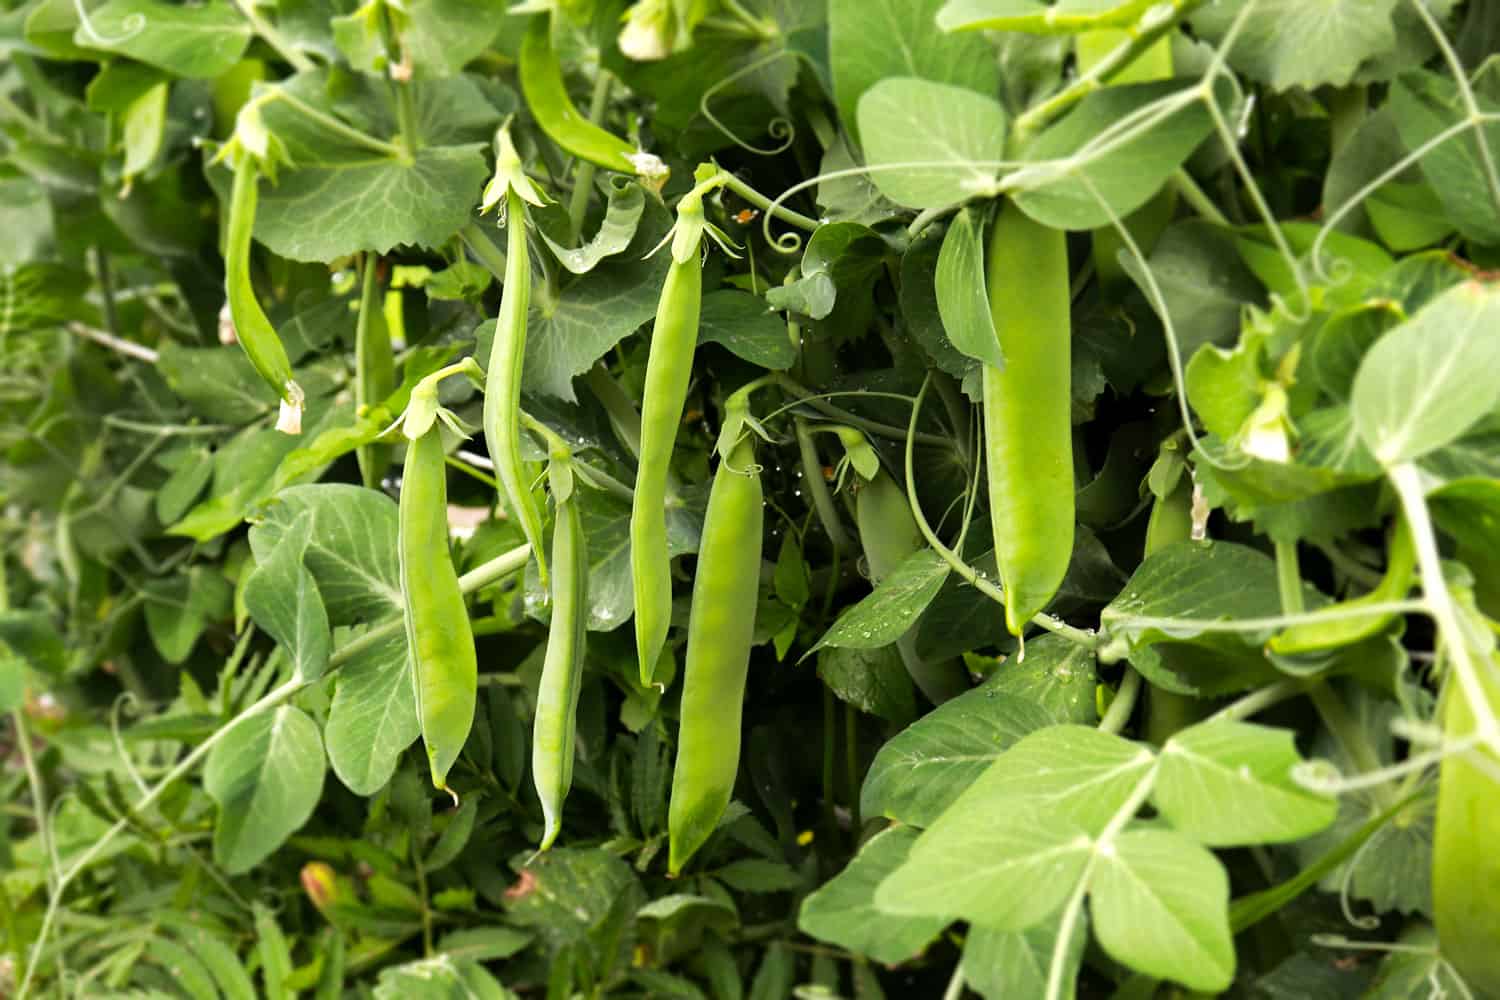 Healthy peas in the garden